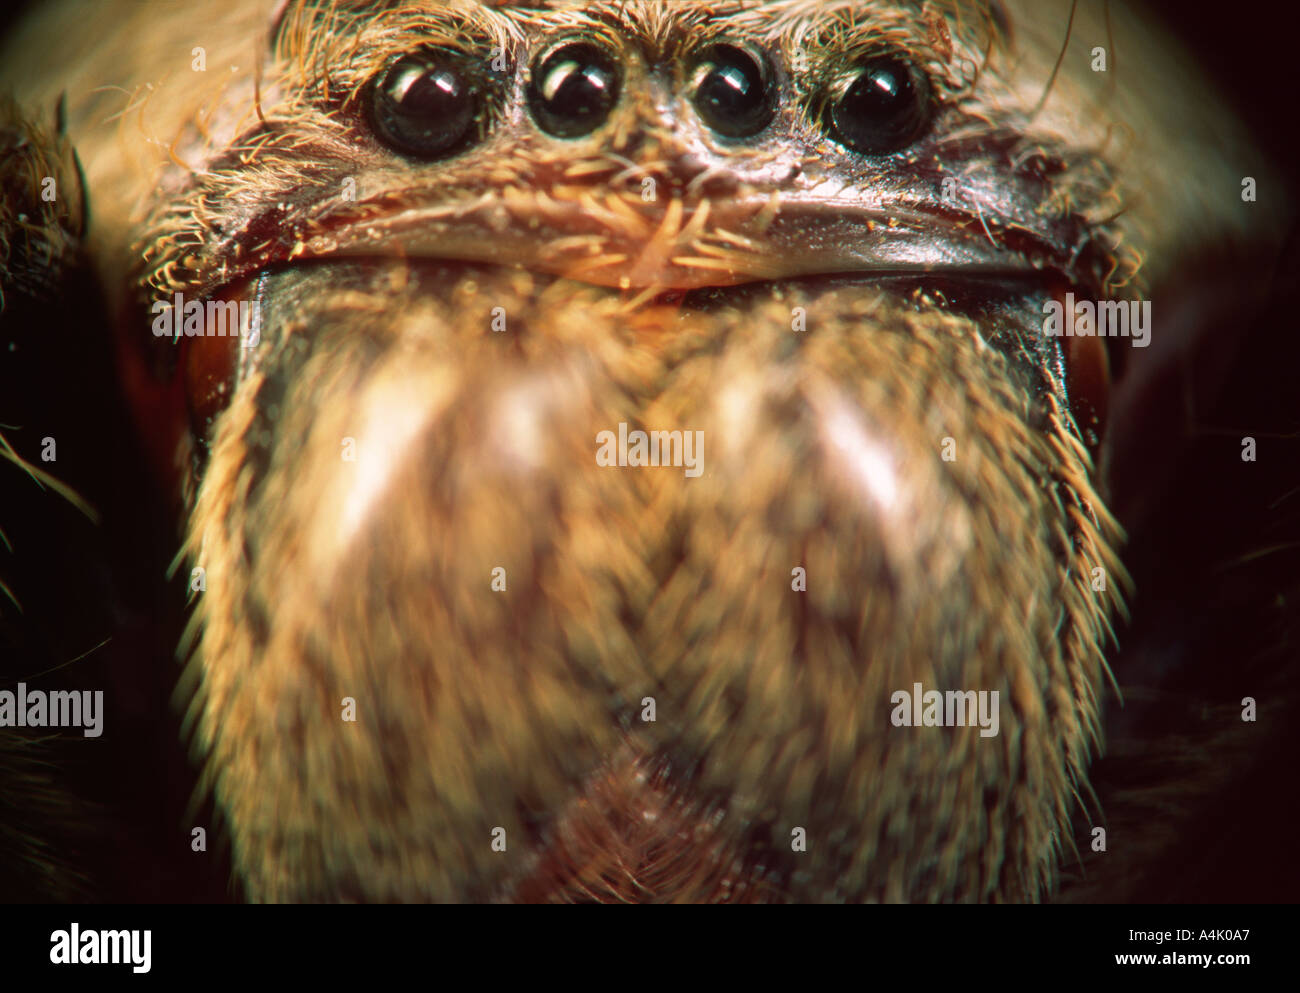 Spider portrait with massive chelicerae South Australia Stock Photo